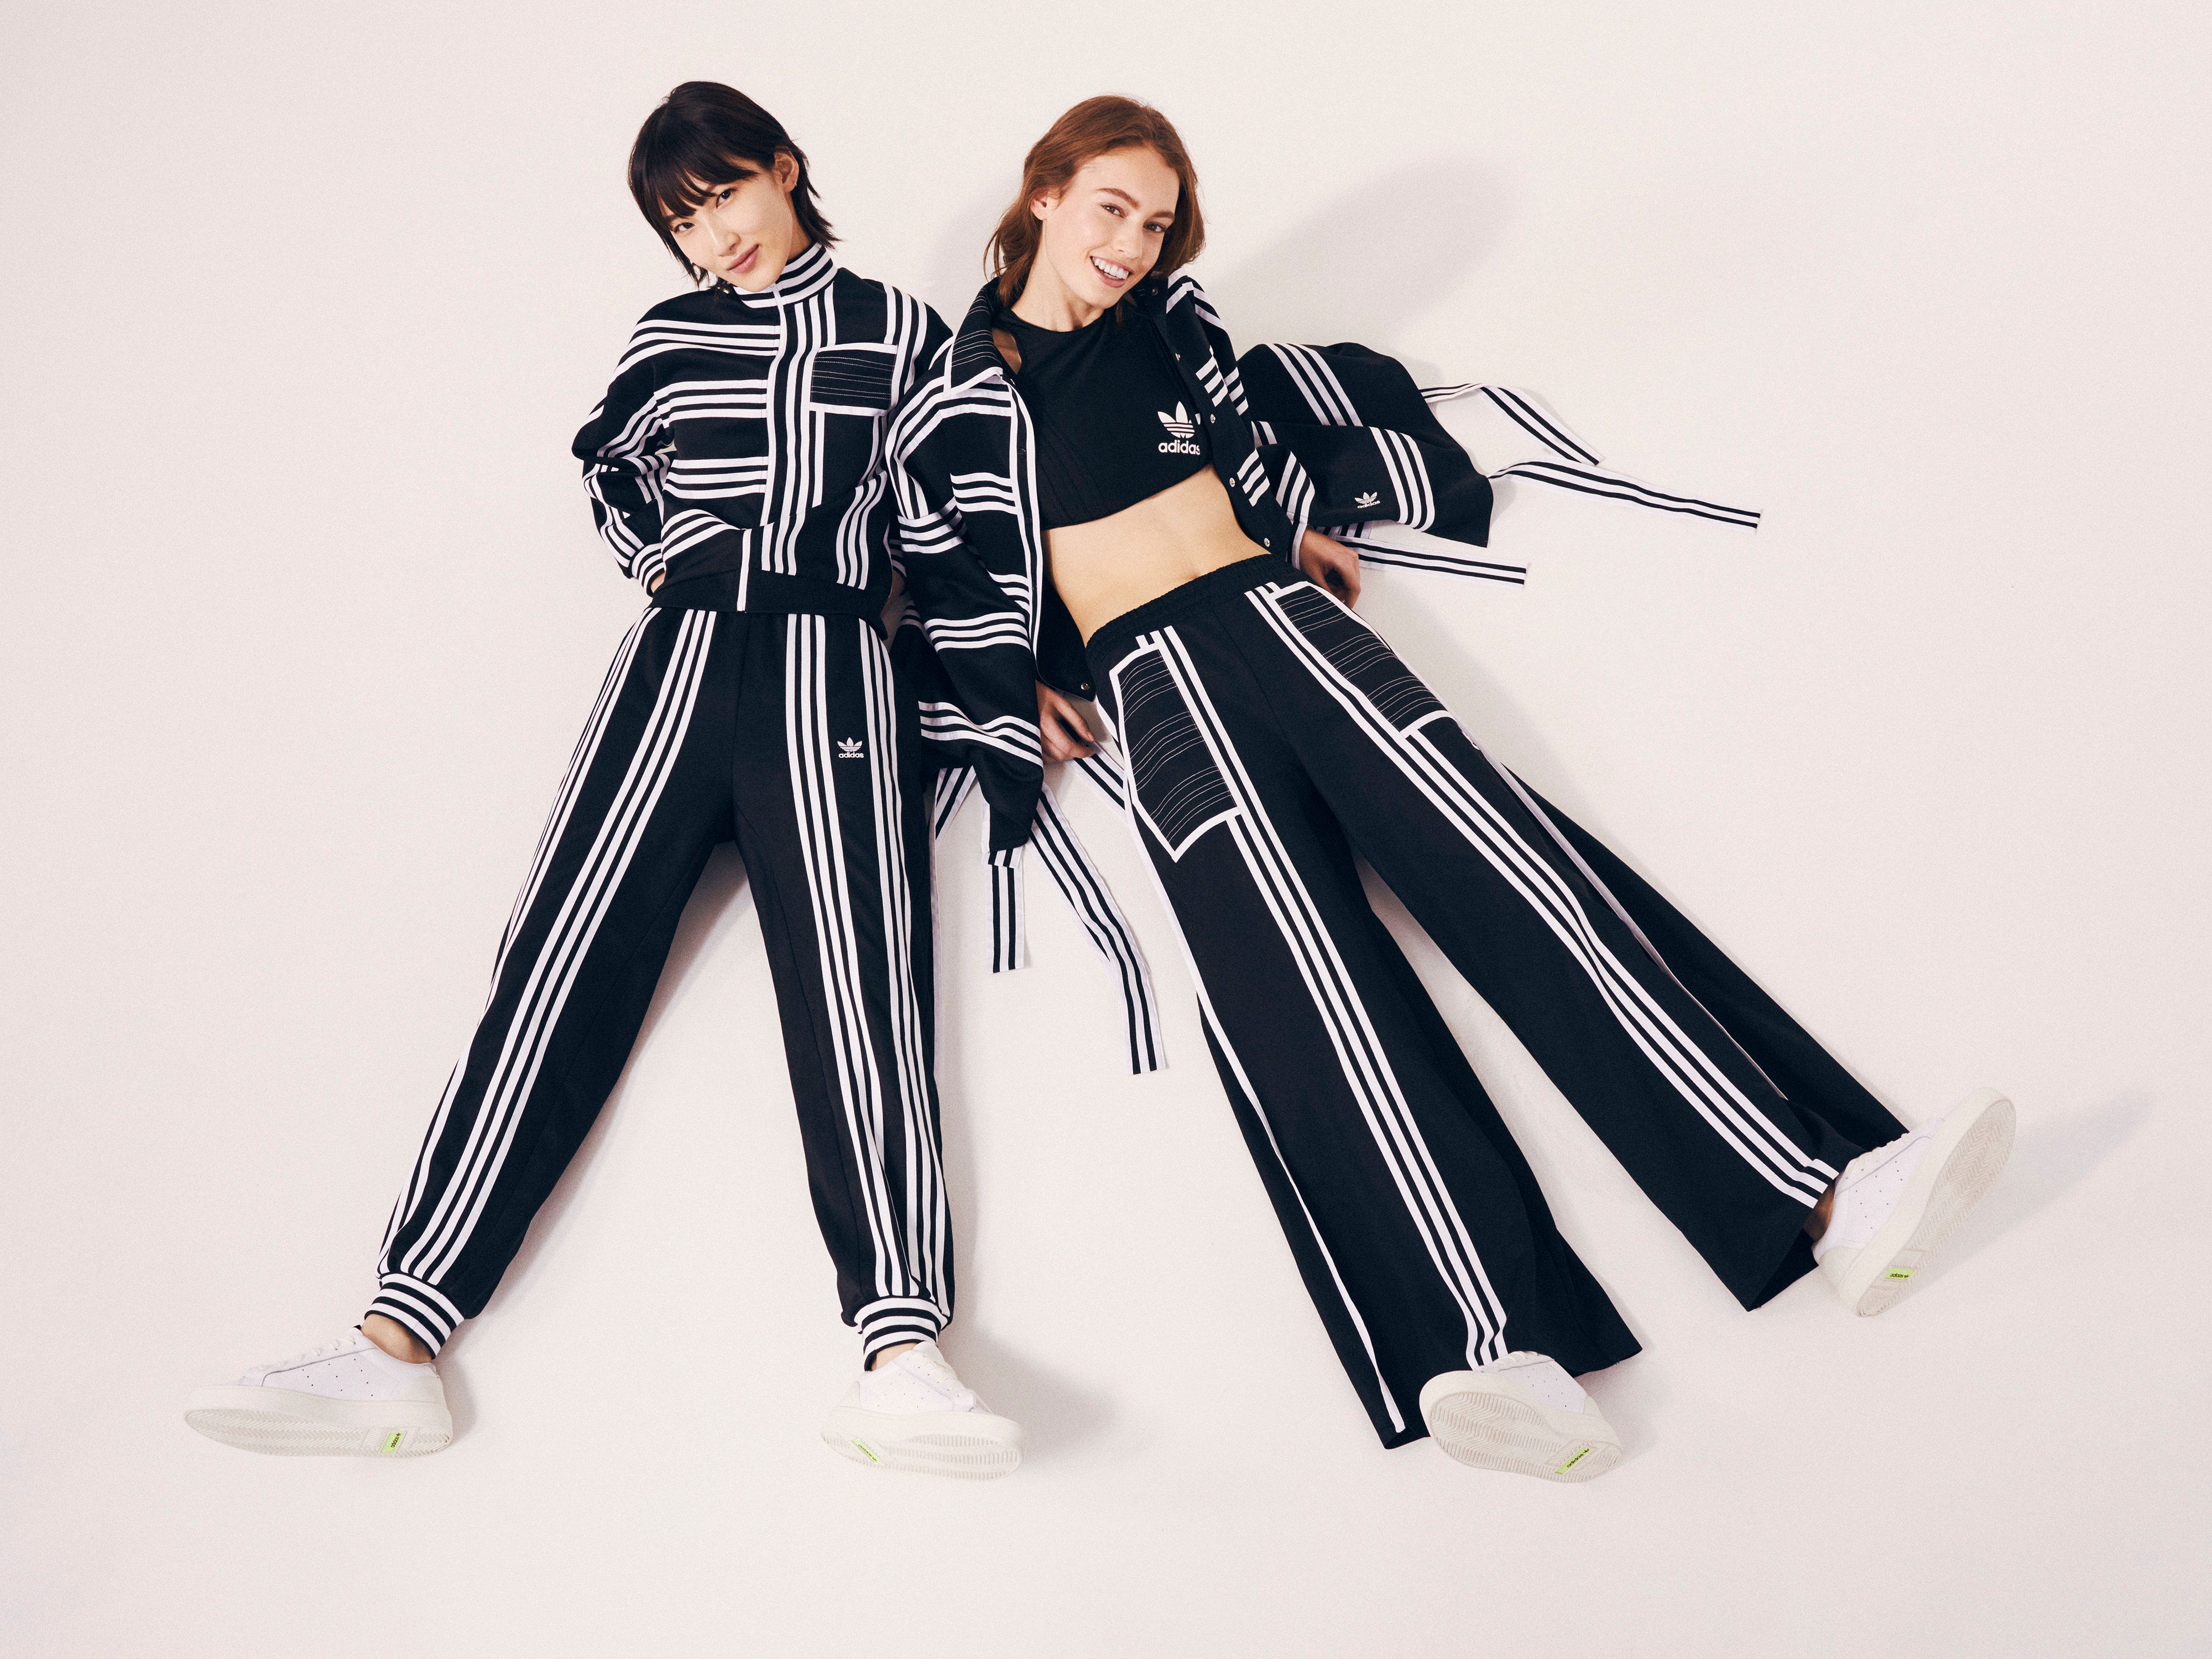 Ji Won Choi and Adidas Drop Second Collection - PAPER Magazine